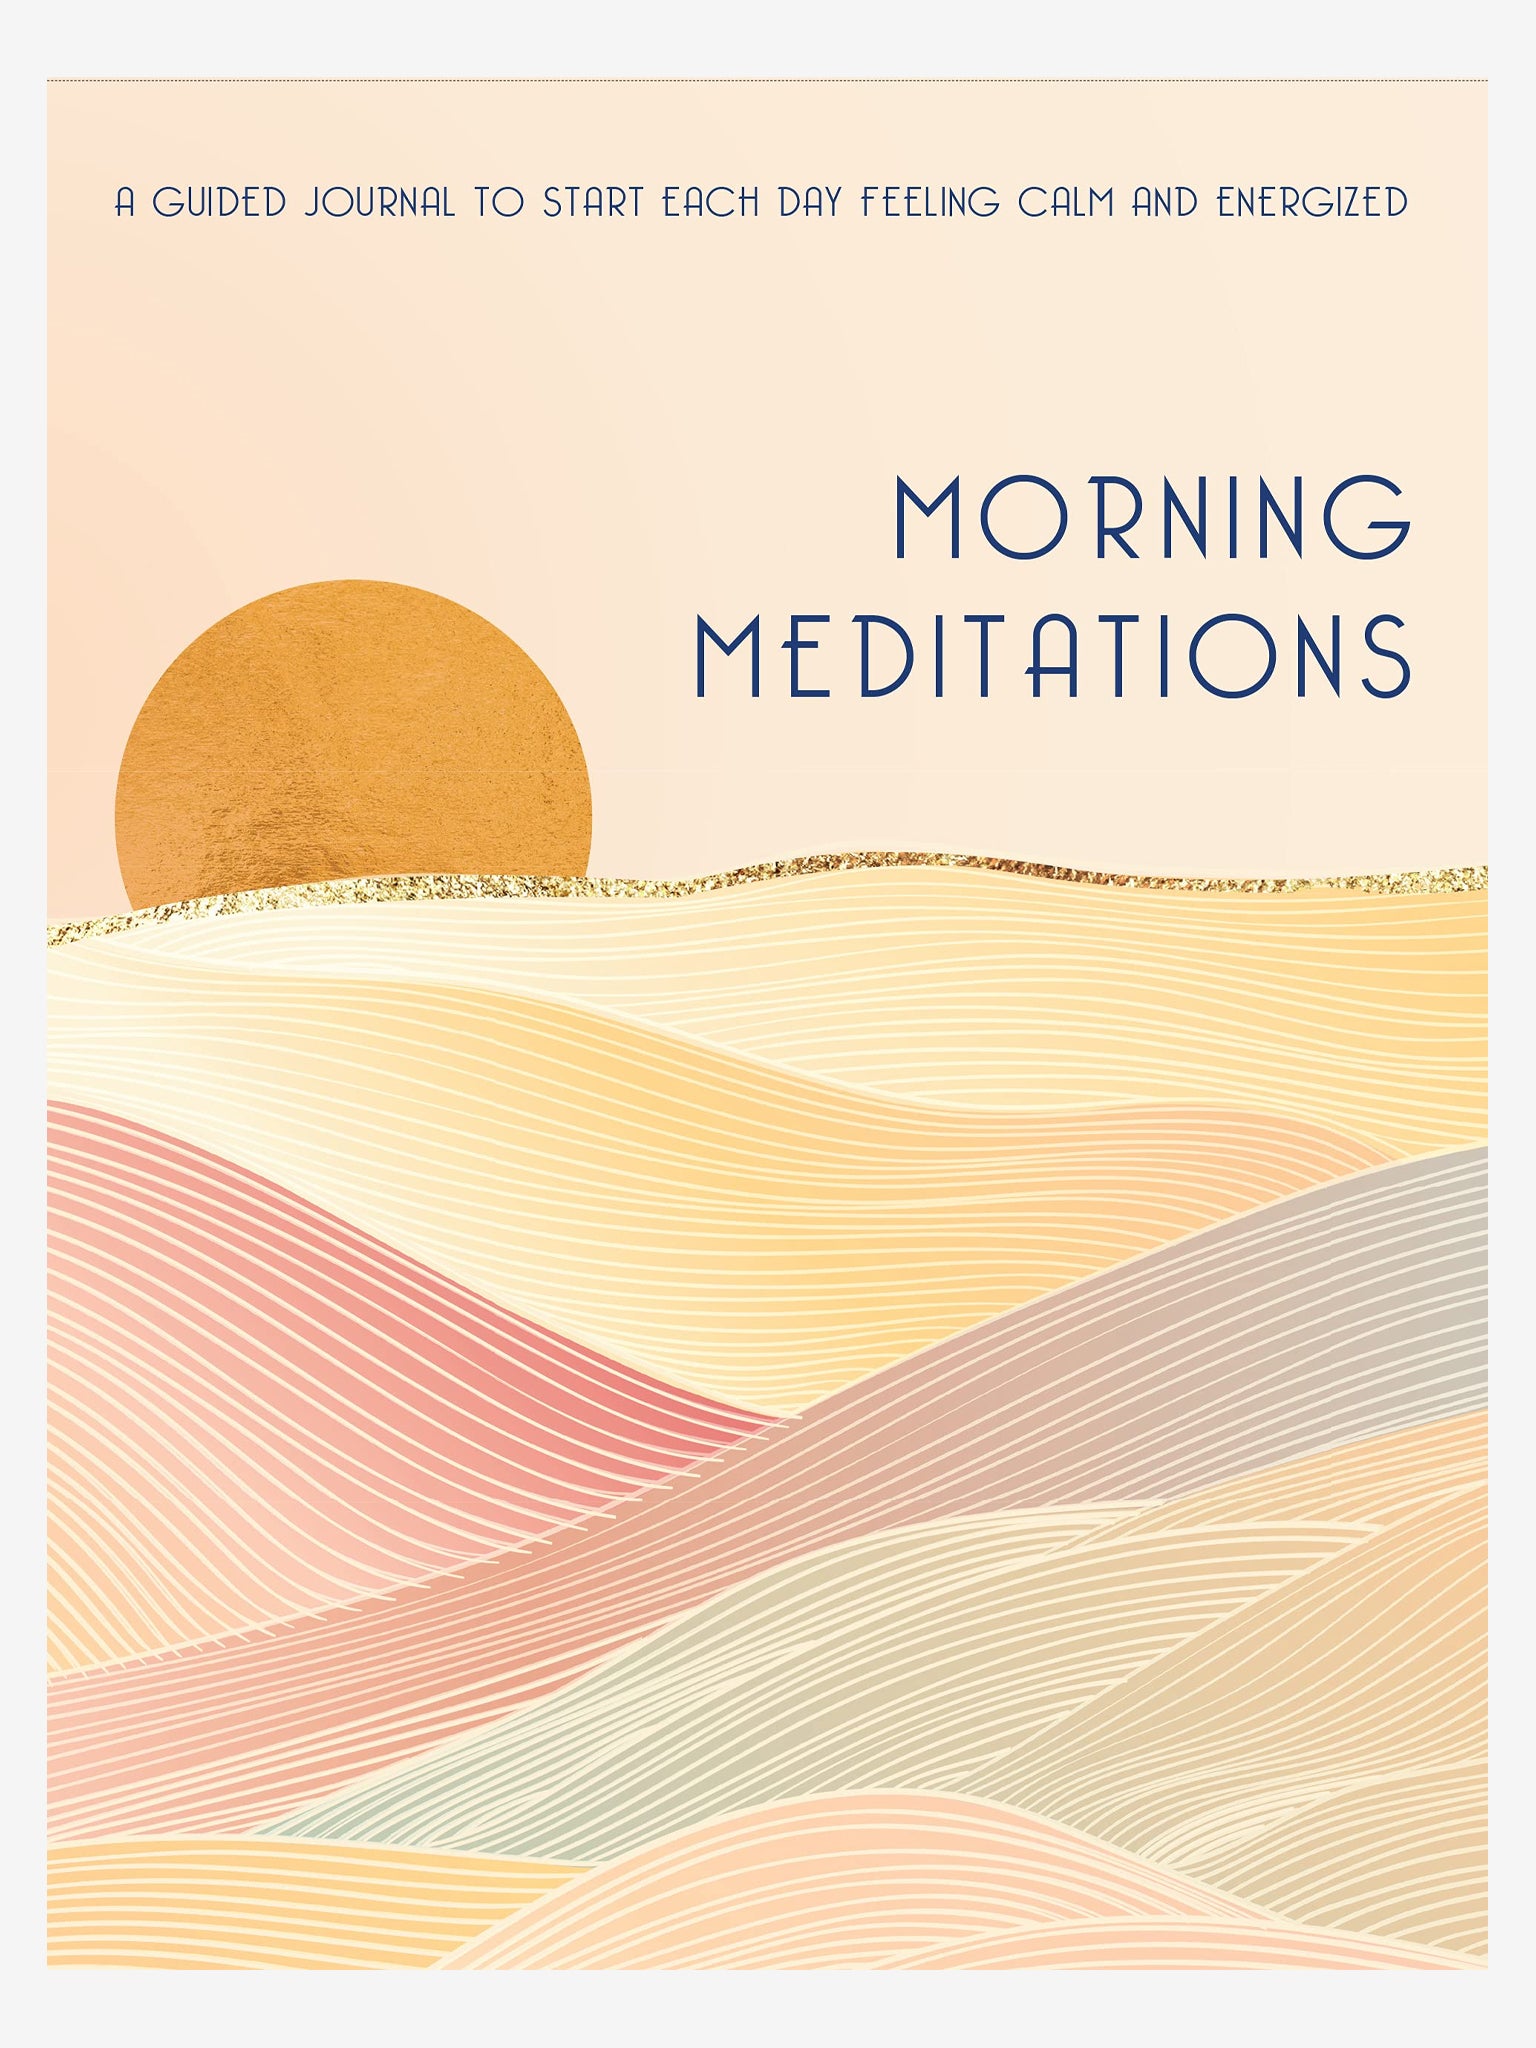 Morning Meditations Guided Journal